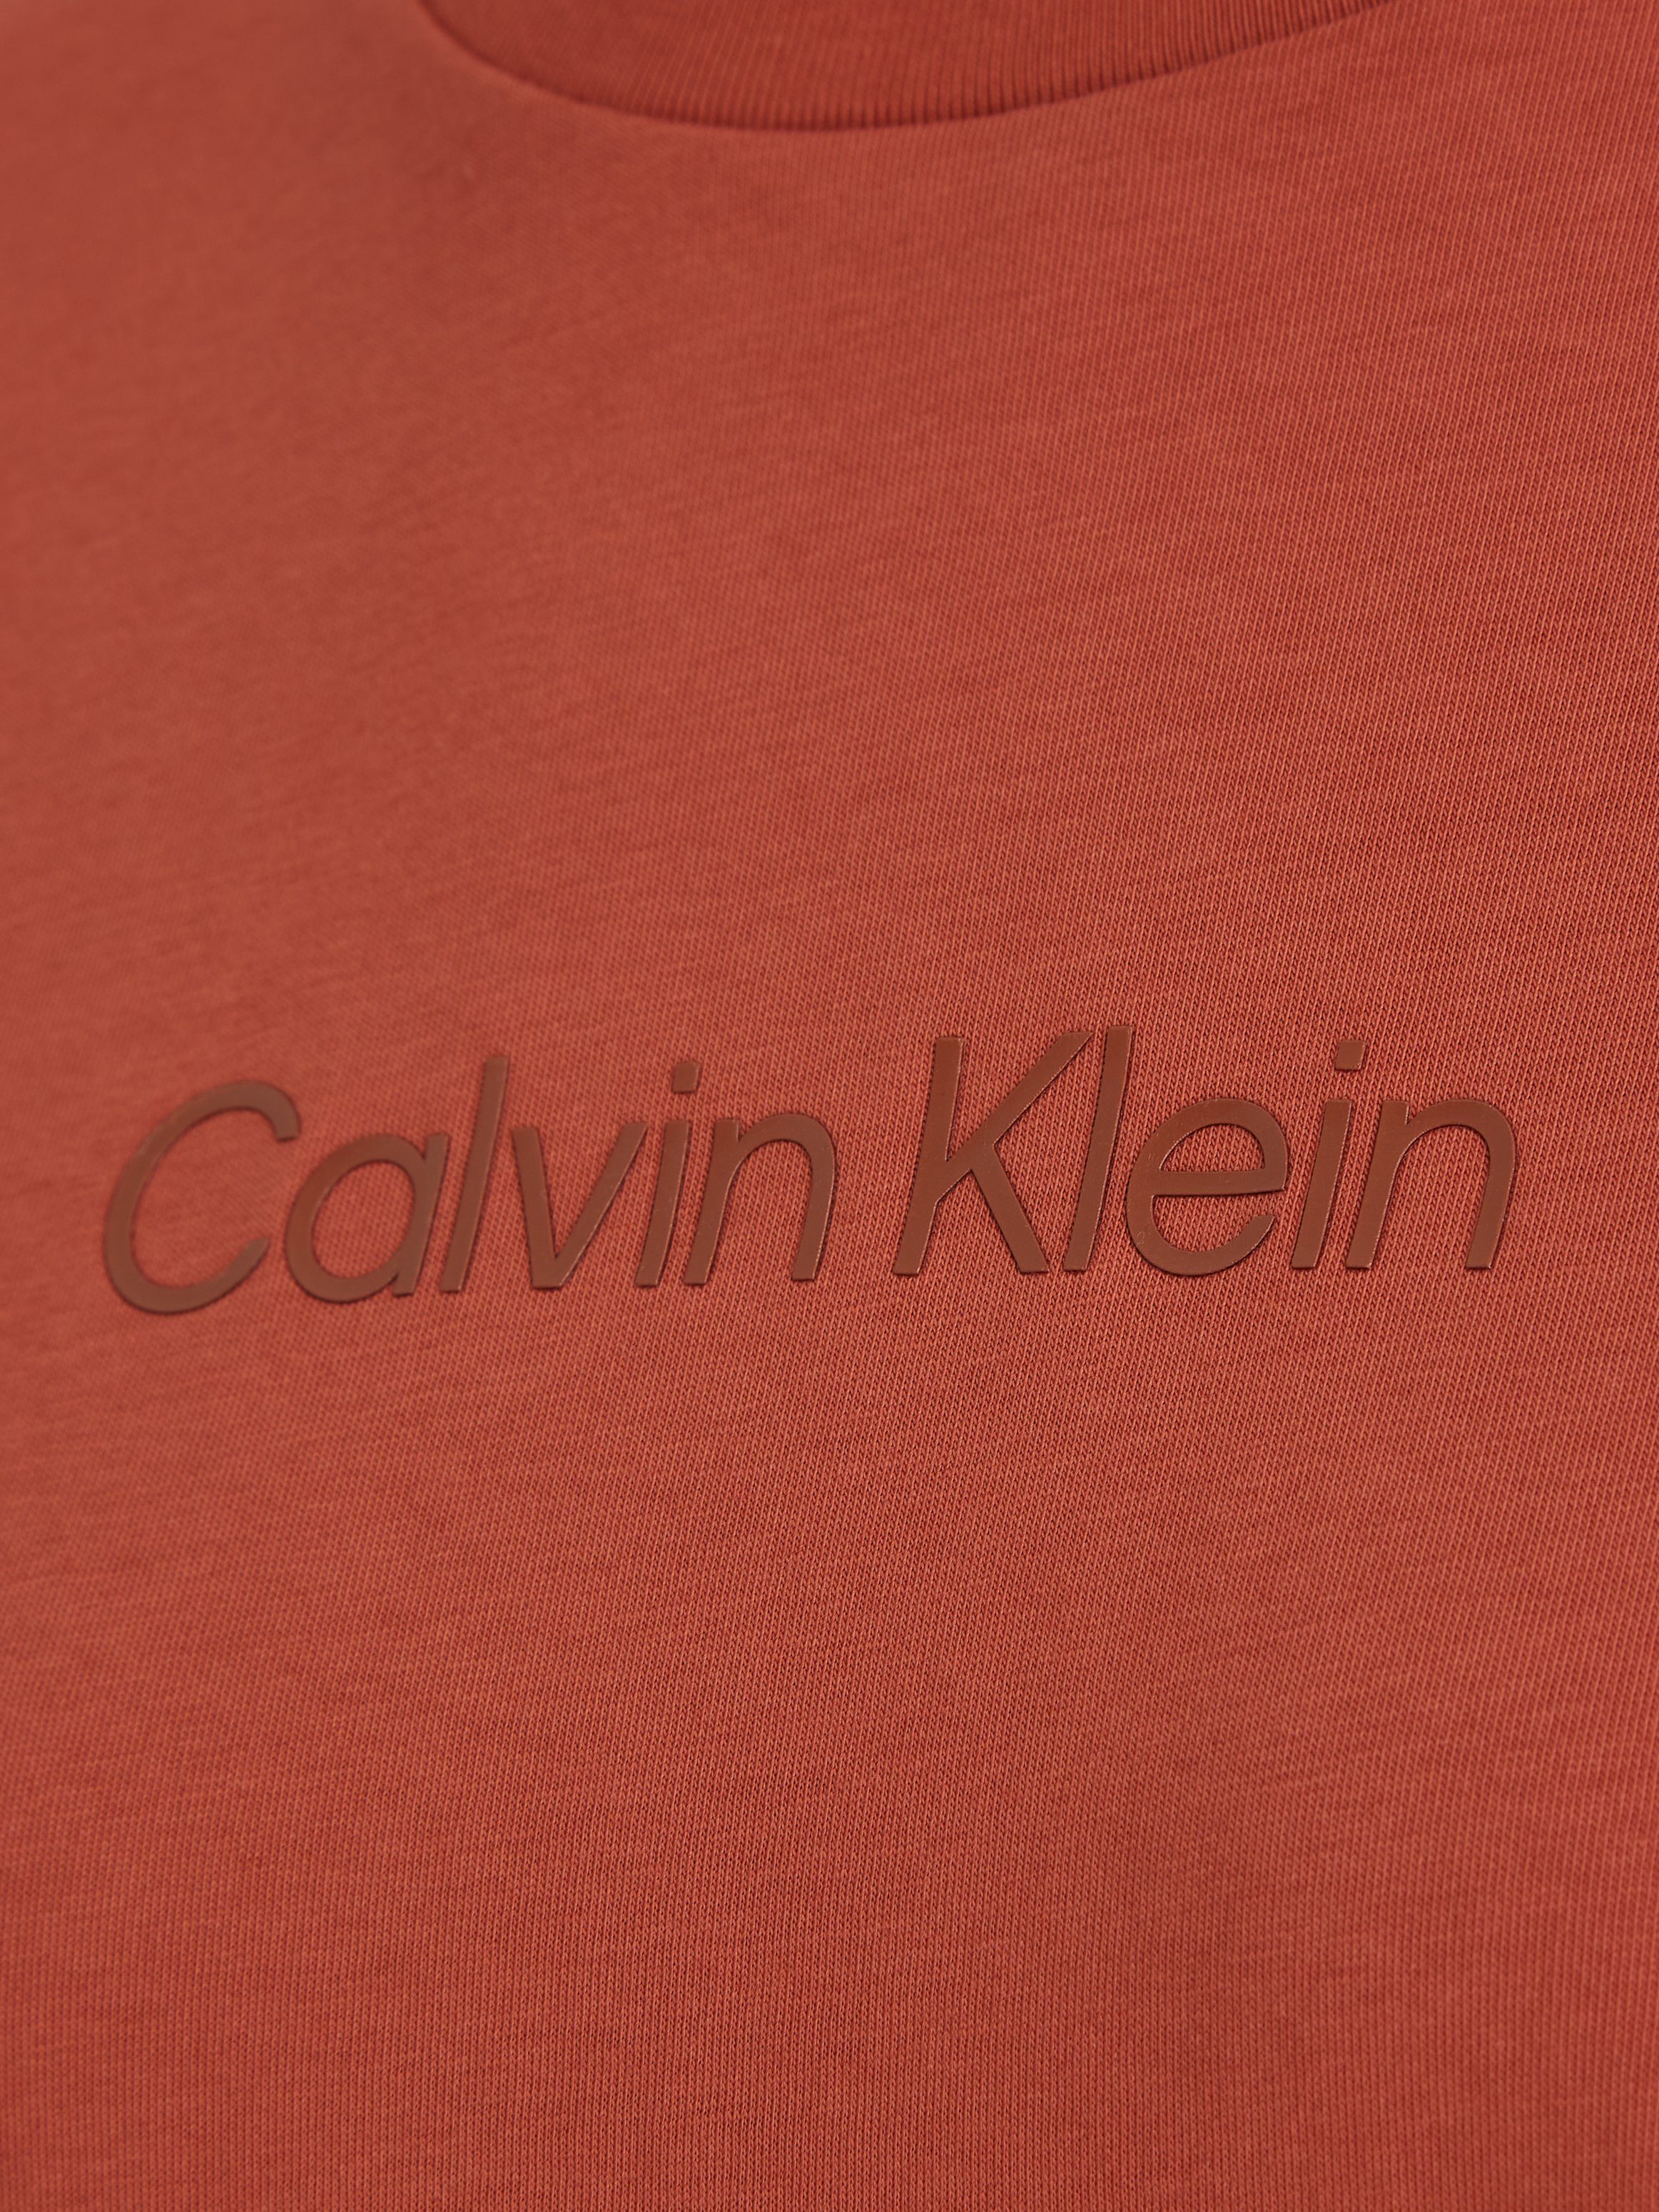 Calvin Klein T-Shirt Shirt beige HERO LOGO REGULAR